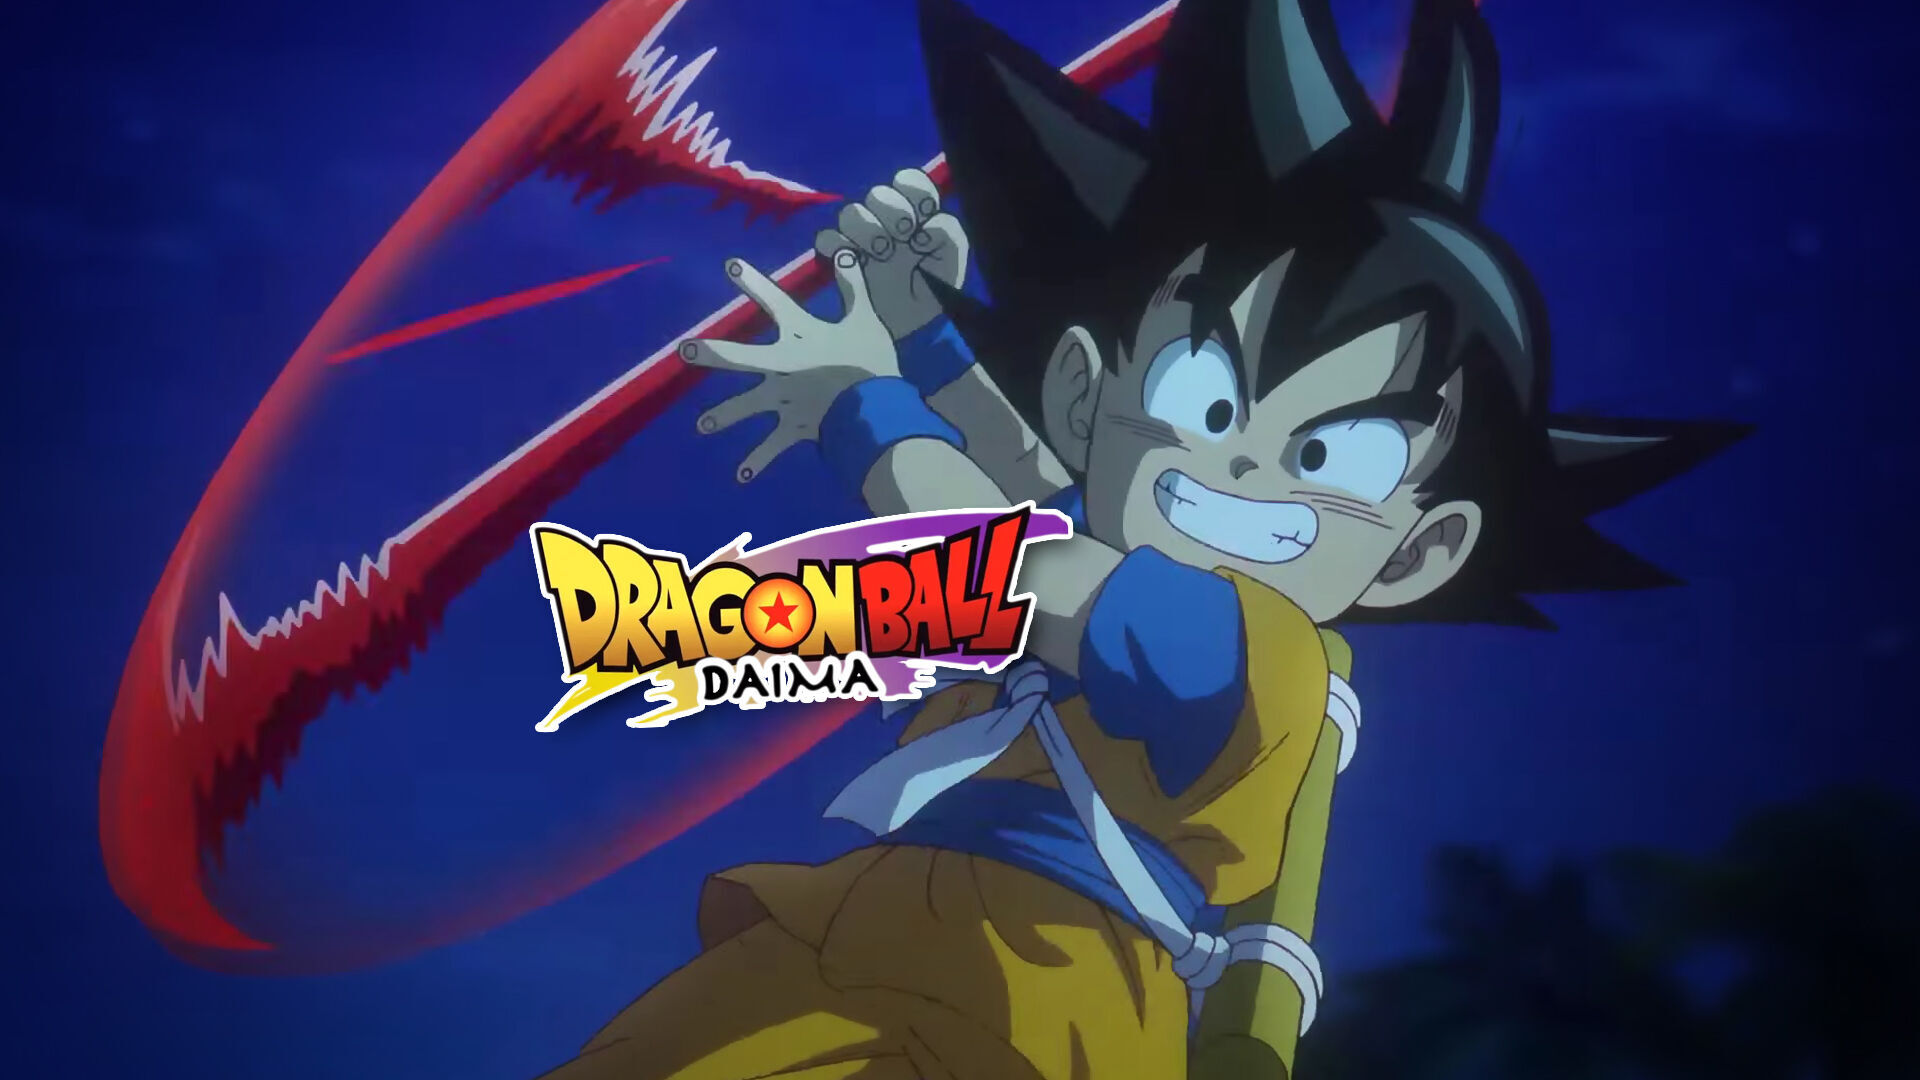 Is Dragon Ball Daima canon? Everything we know about Akira Toriyama's new  anime - Meristation